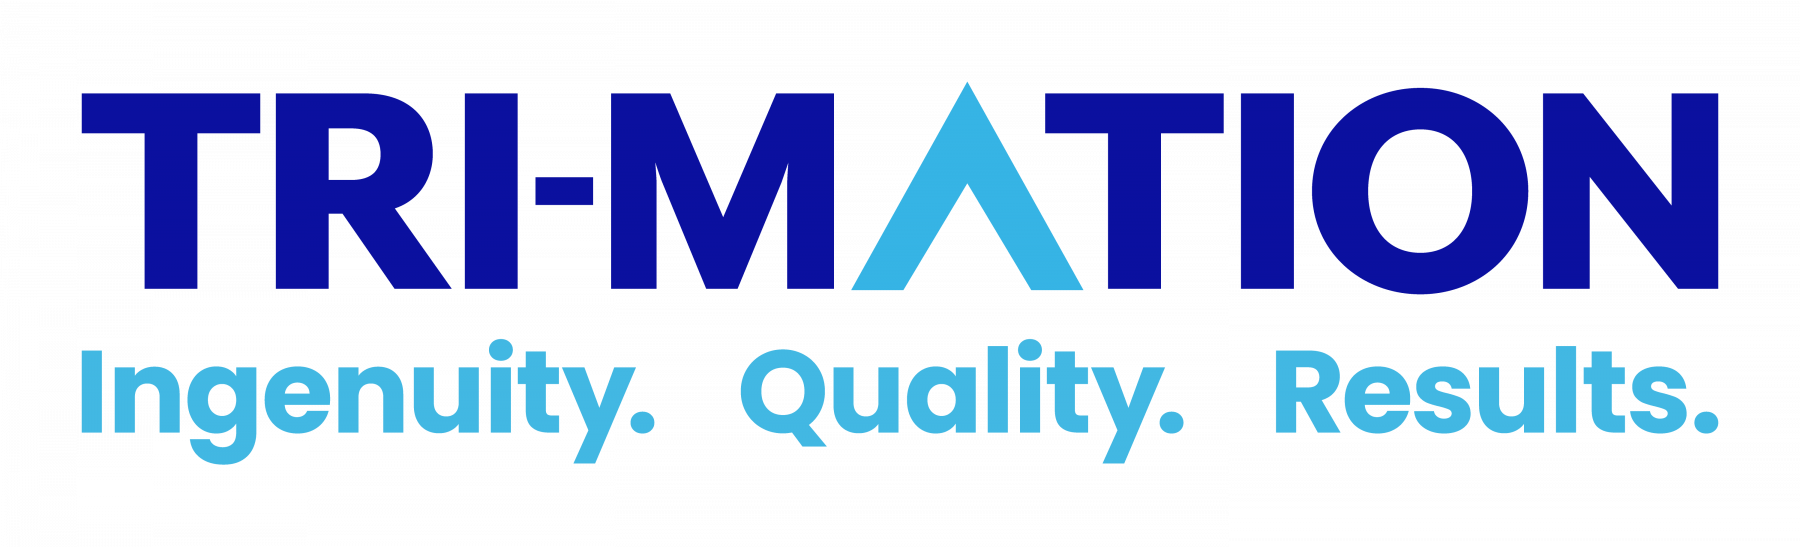 16339TMILOG_Tri-Mation-Logo-Slogan-Final